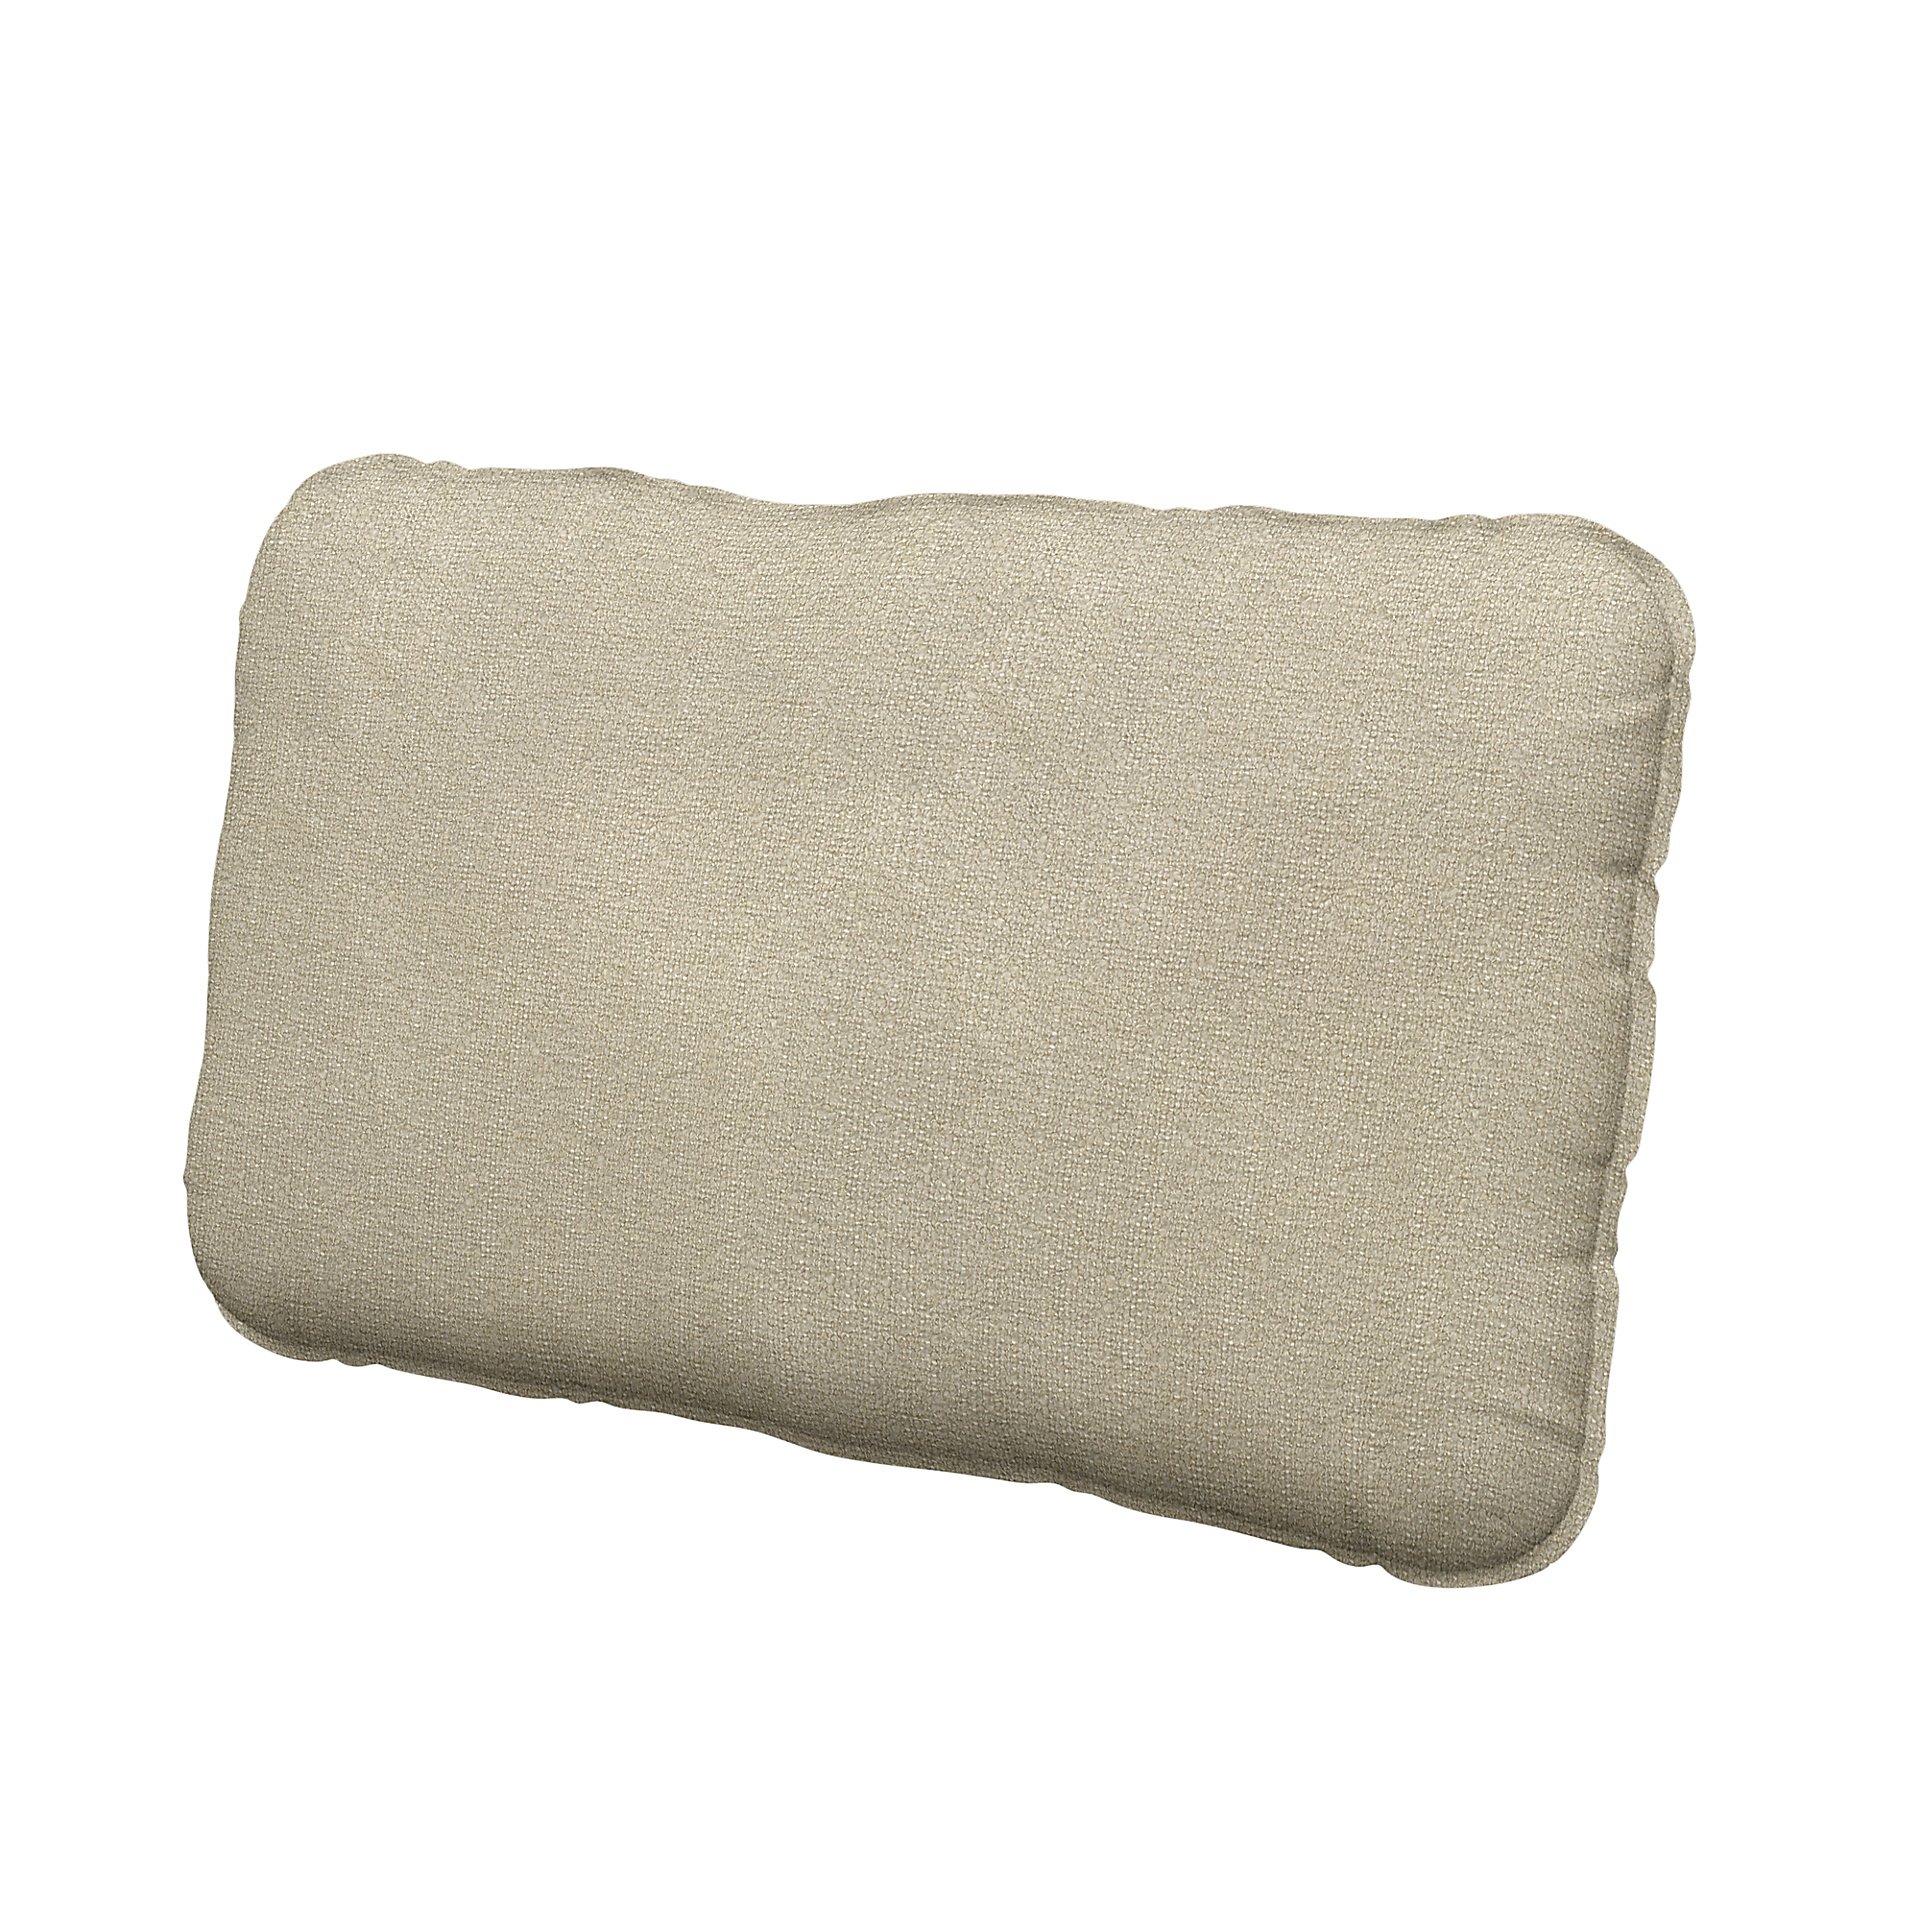 IKEA - Vallentuna back cushion cover 40x75cm, Cream, Boucle & Texture - Bemz